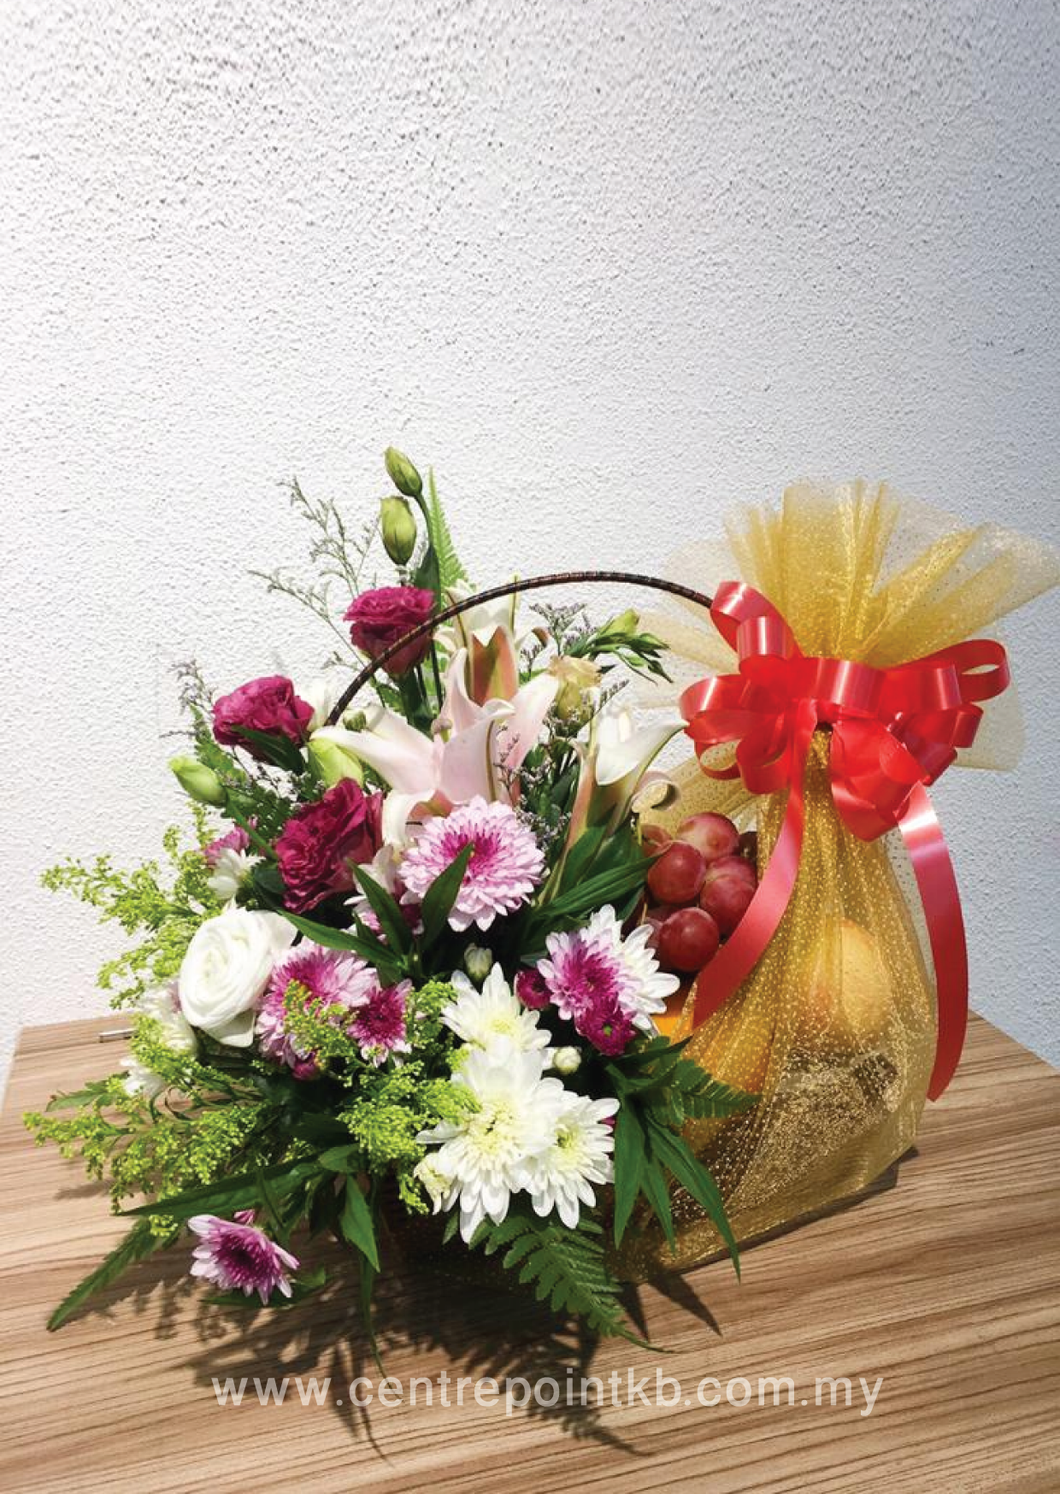 Fruit & Flower Basket 01 (RM 80.00)